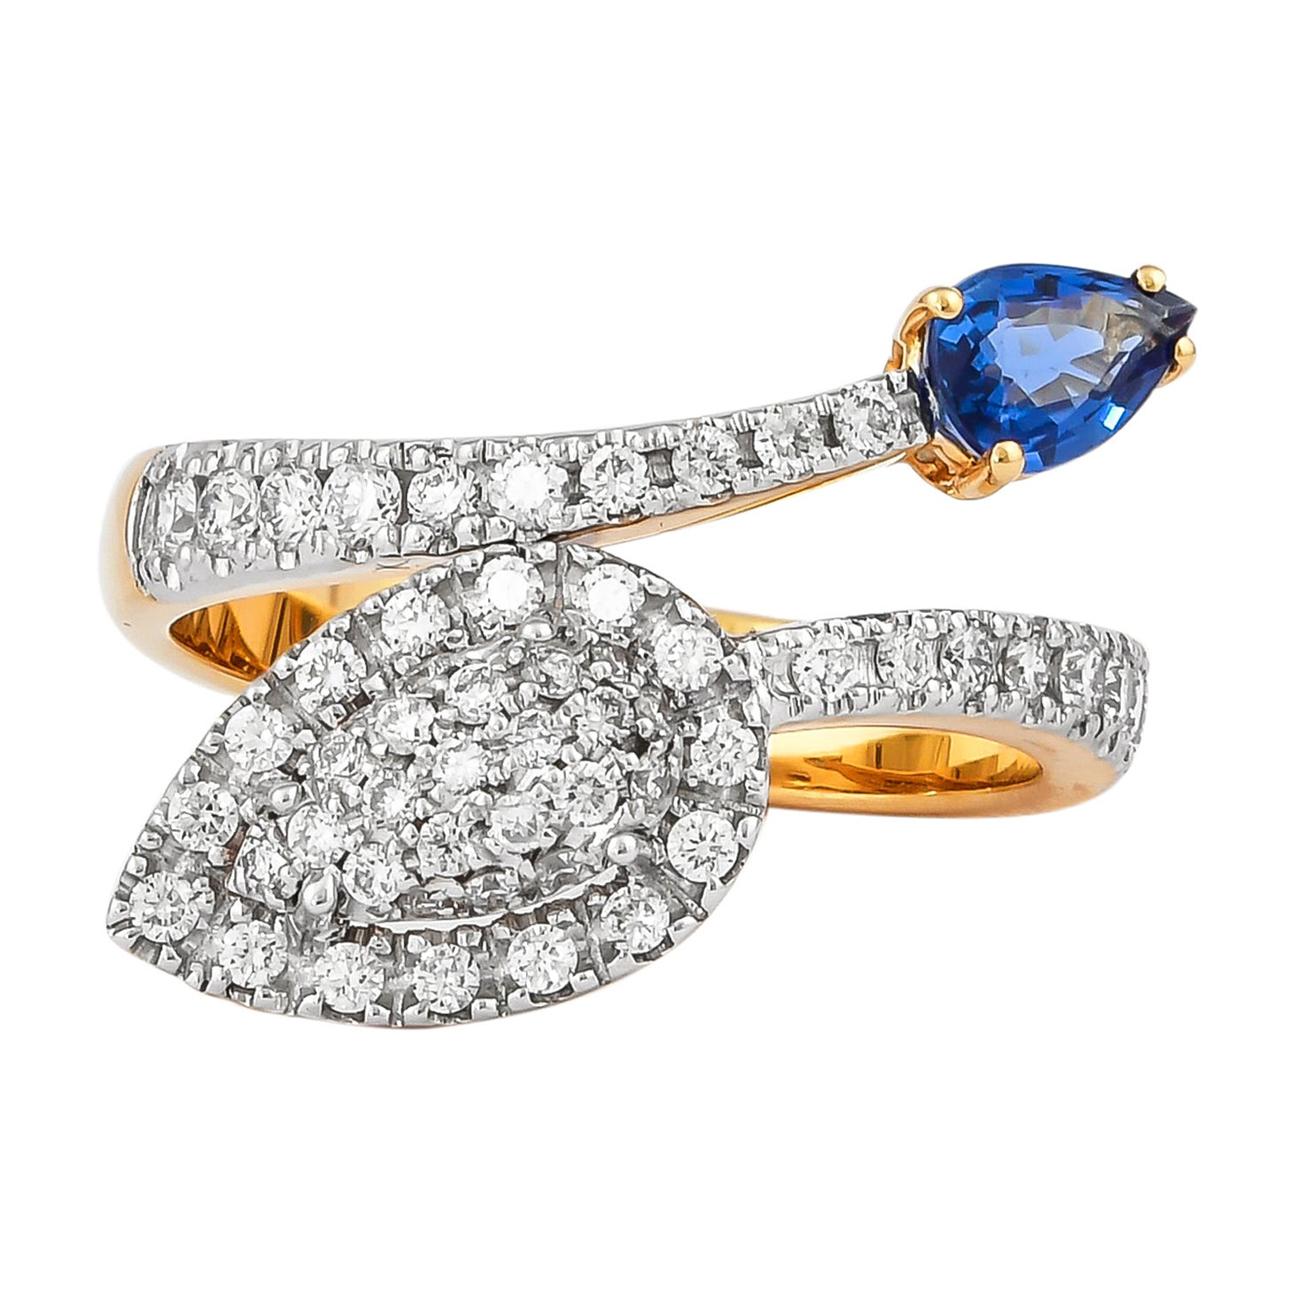 0.55 Carat Blue Sapphire and Diamond Ring in 18 Karat Yellow Gold